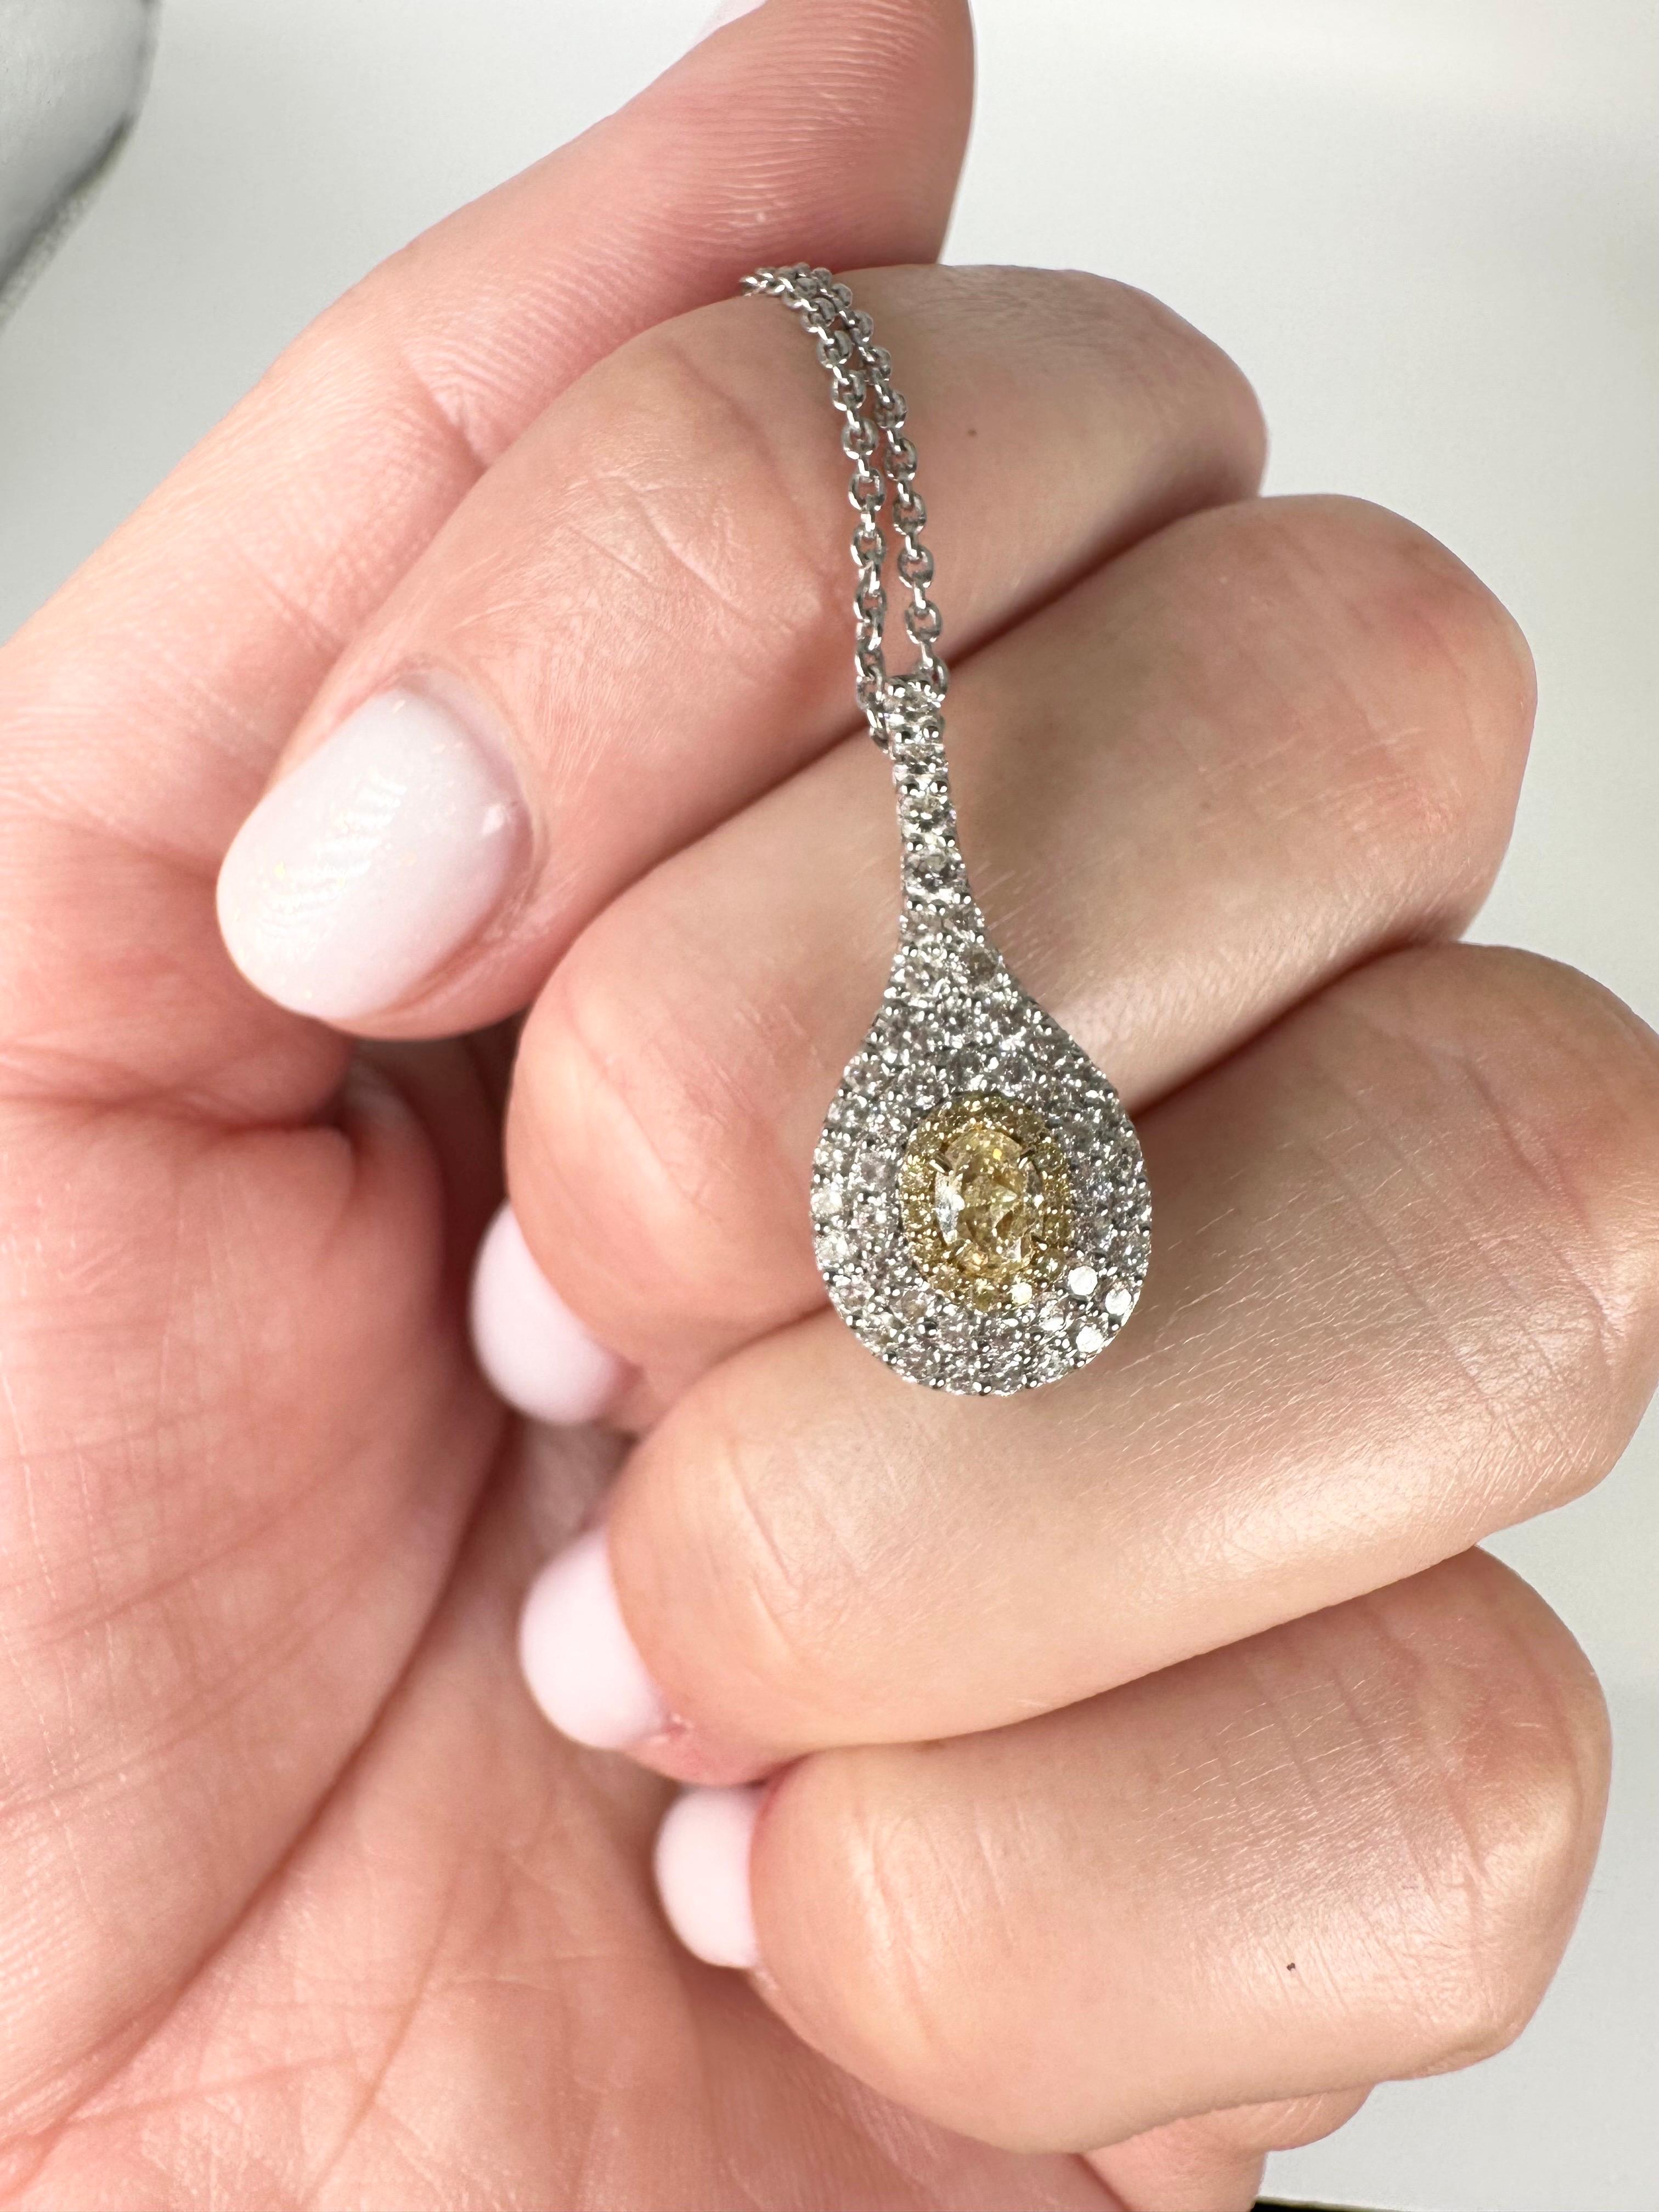 Fancy Yellow Diamond pendant necklace 18KT white gold 18